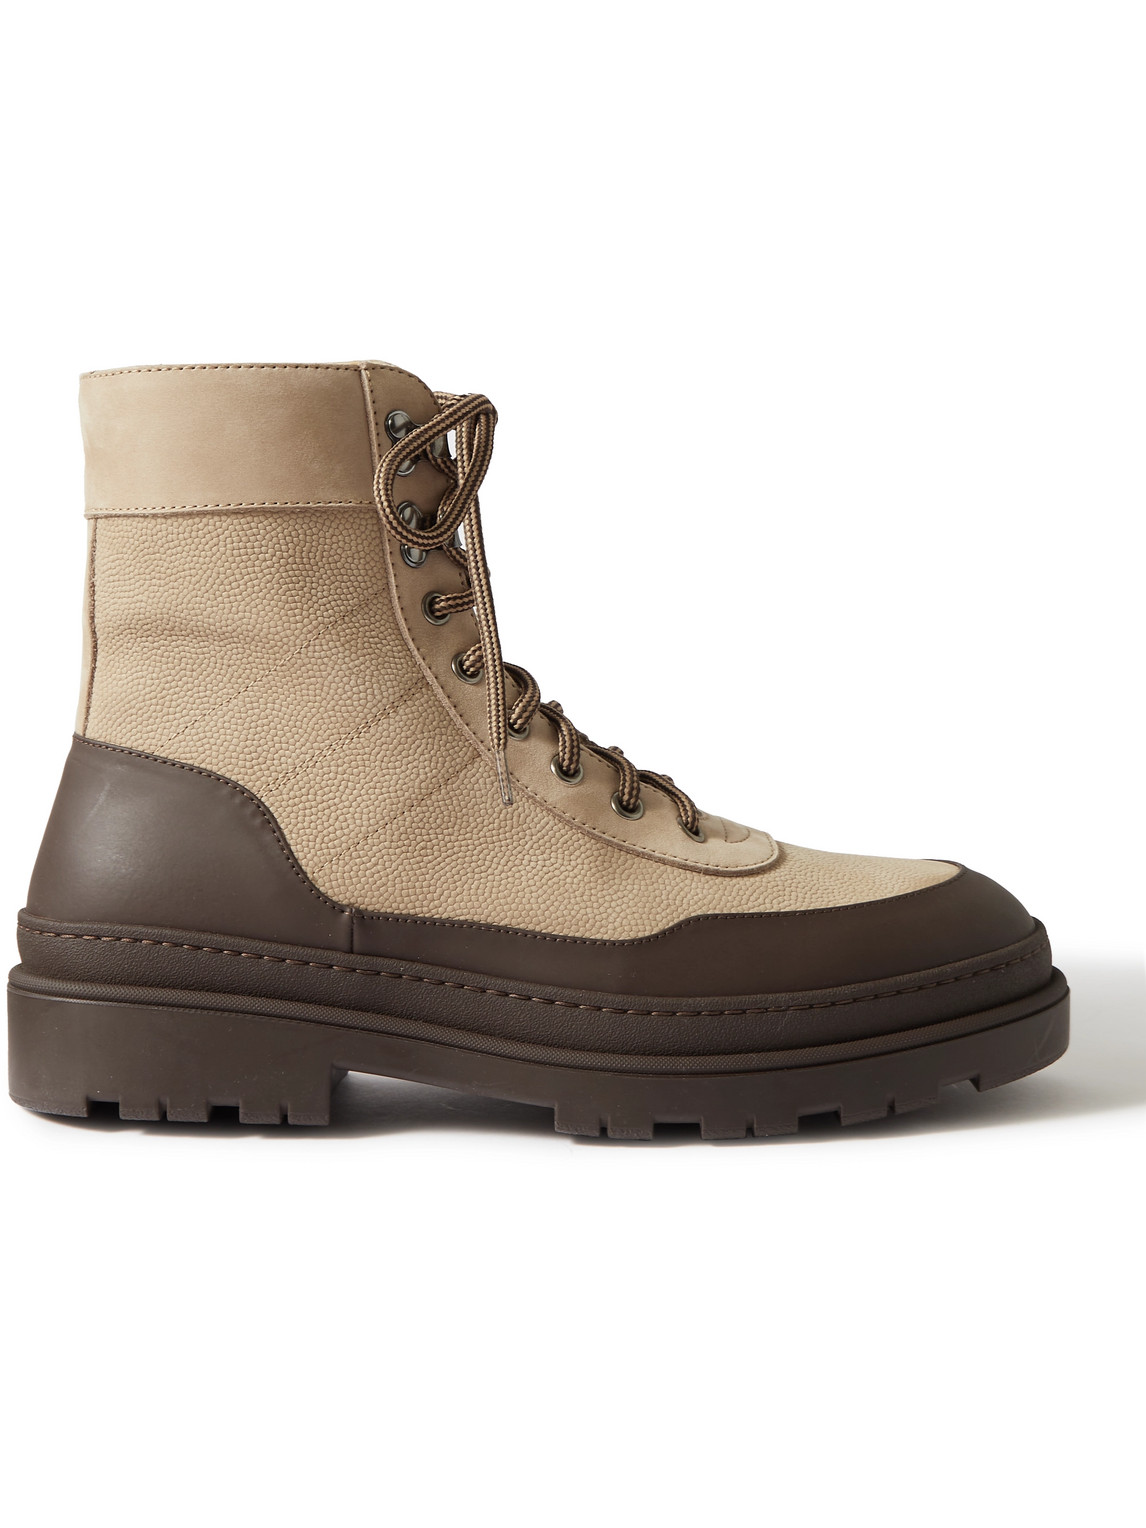 Brunello Cucinelli - Rubber-Trimmed Pebble-Grain Leather Hiking Boots - Men - Brown - EU 40 von Brunello Cucinelli